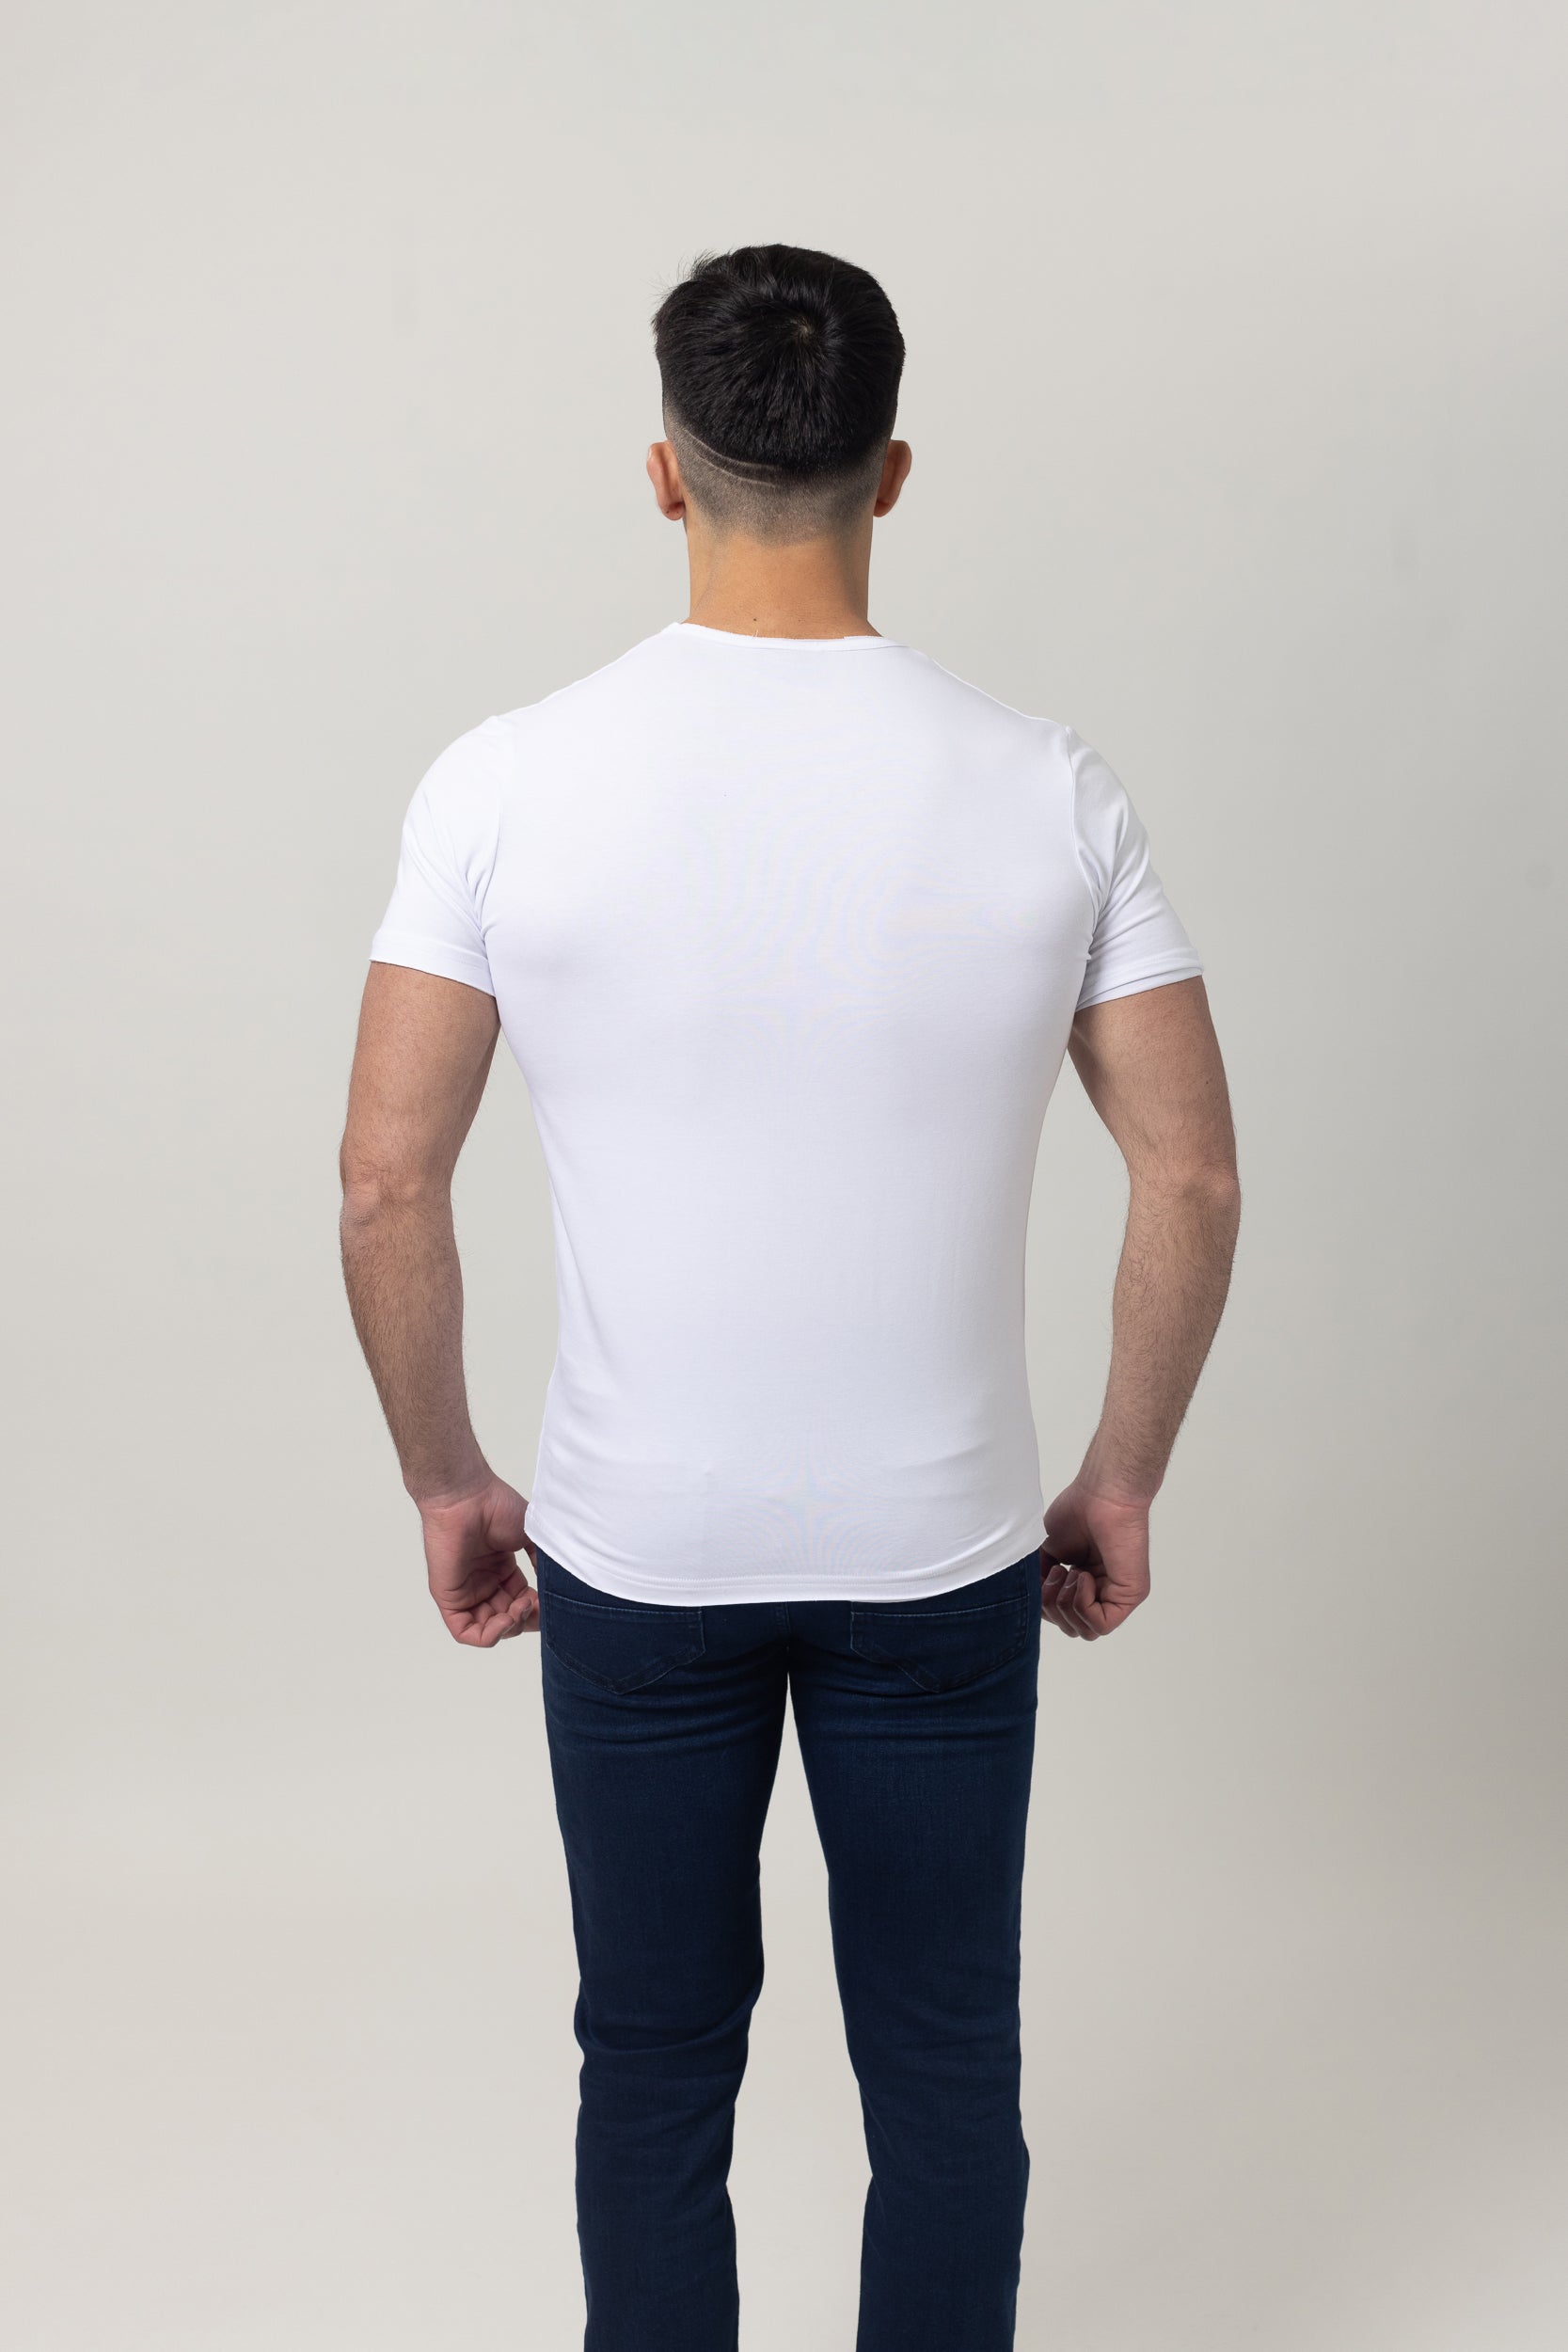 T-Shirt Cotton Lycra V- Neck  - White